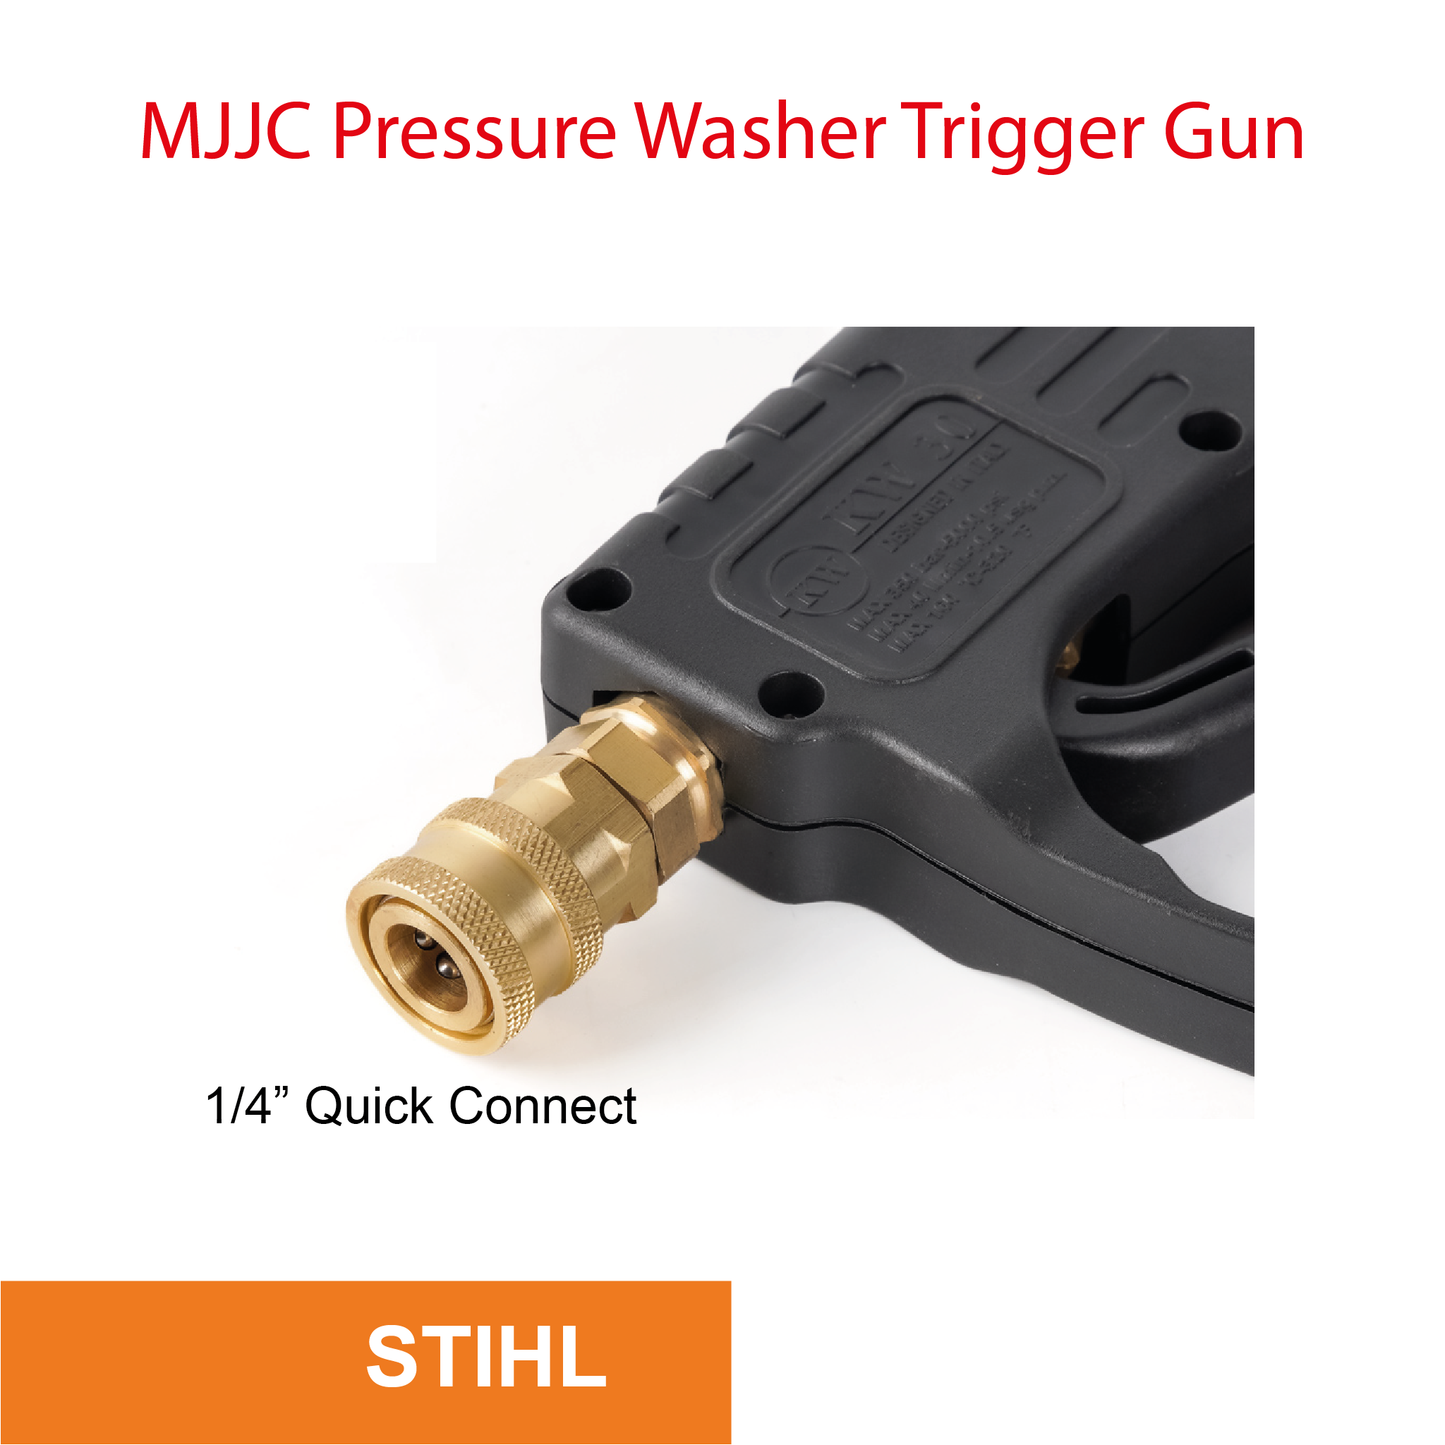 STIHL - MJJC Light Weight Pressure Washer Trigger Spray Gun with Live Swivel